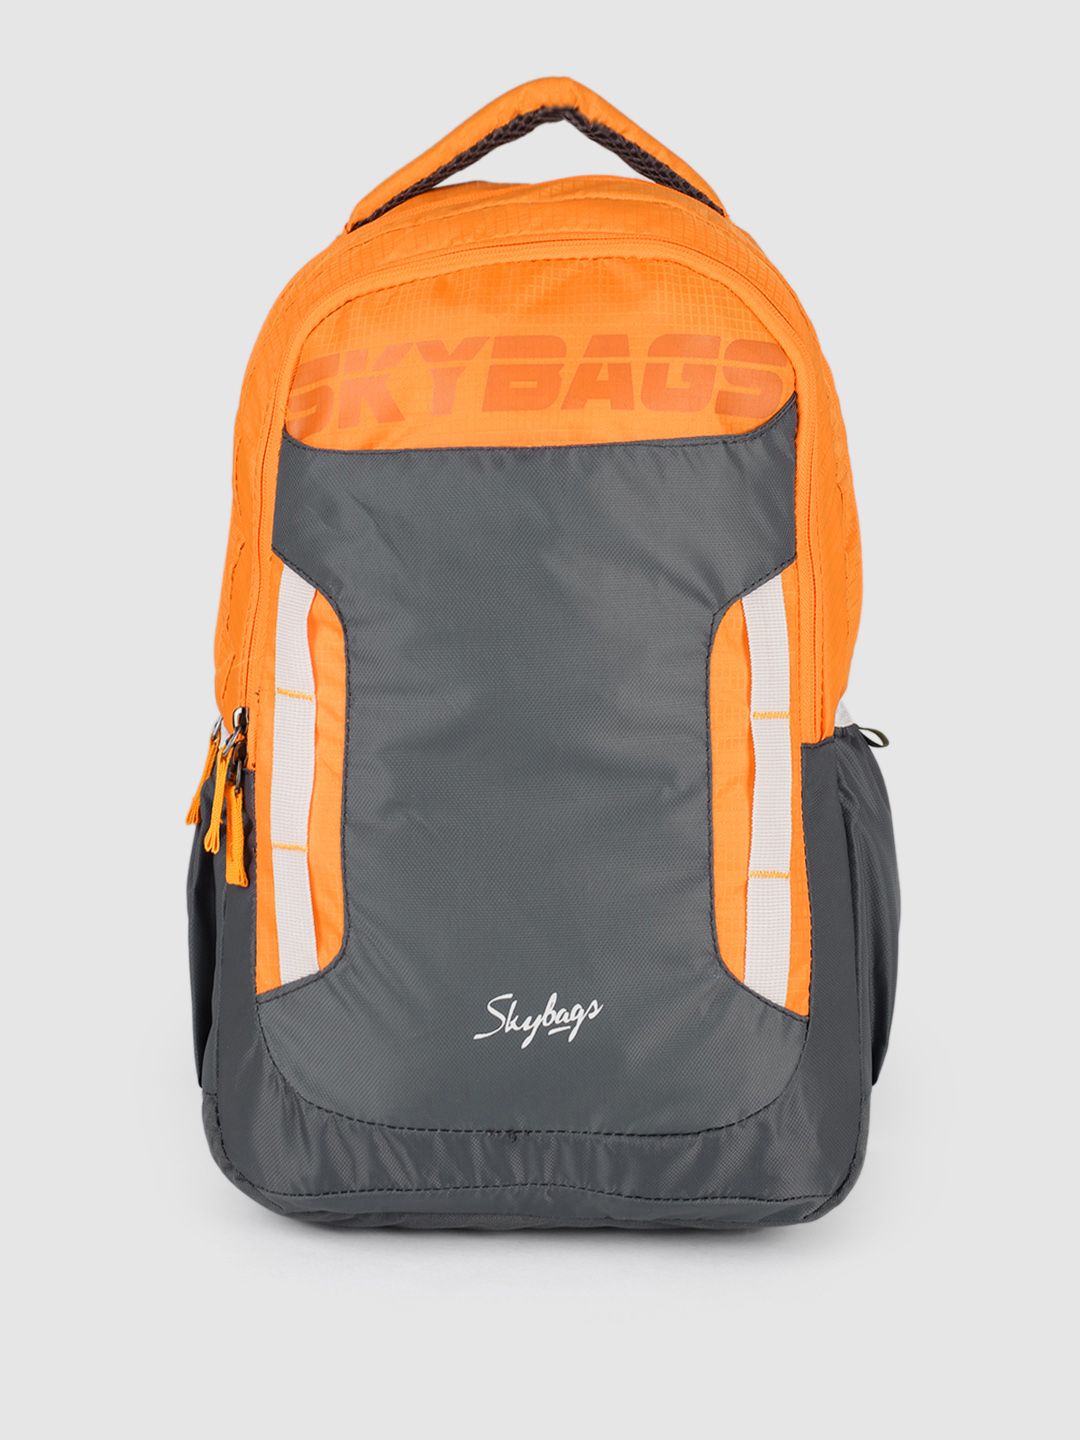 Skybags Unisex Orange & Grey Voxel Backpack Price in India